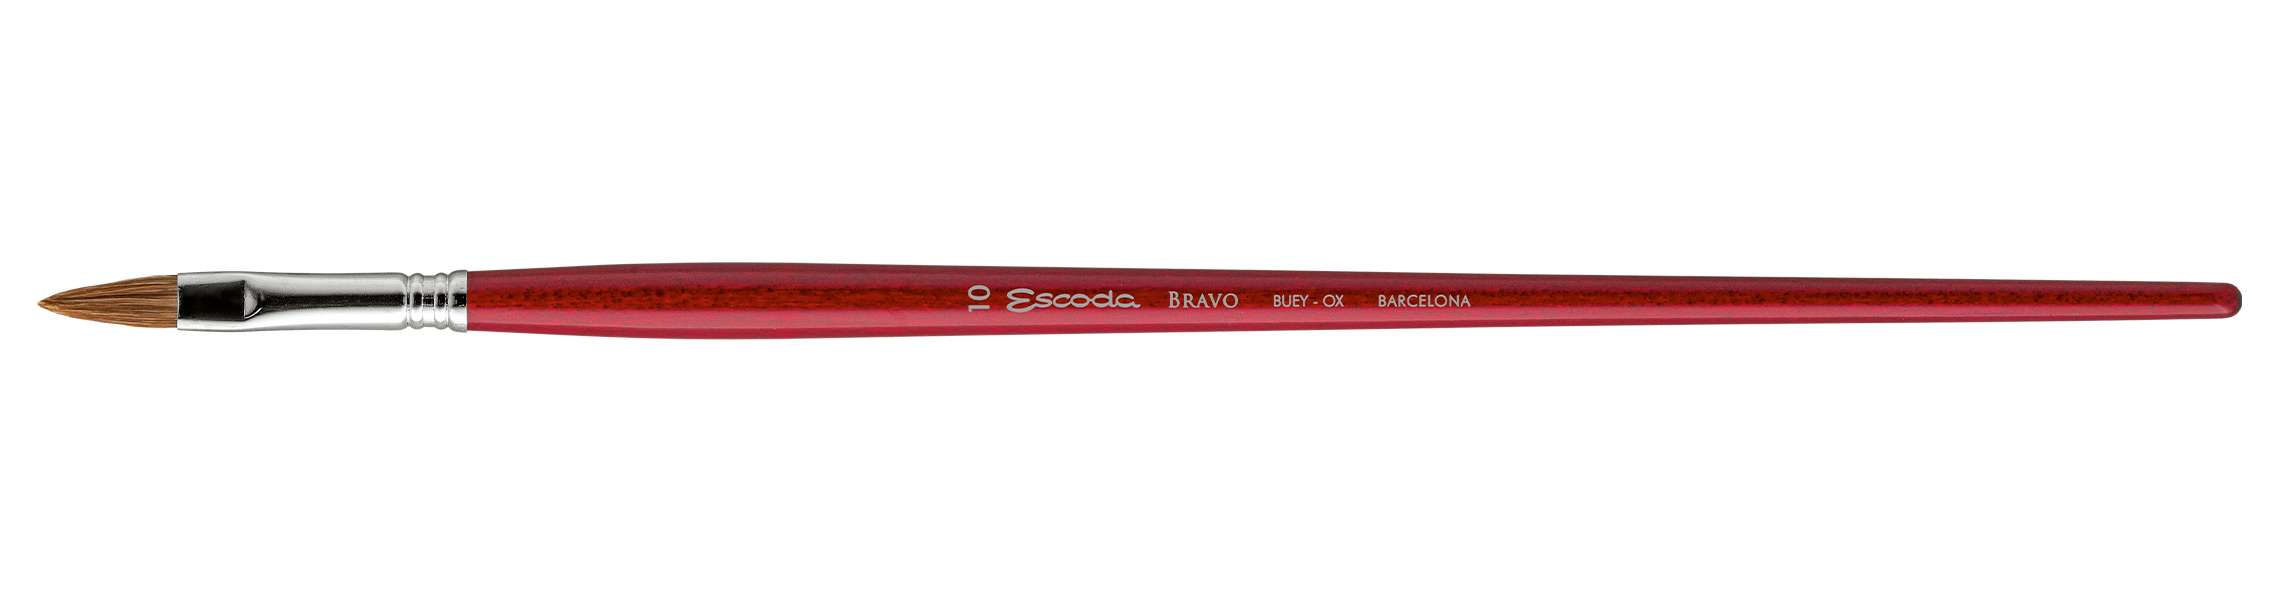 Escoda brushes serie 3217